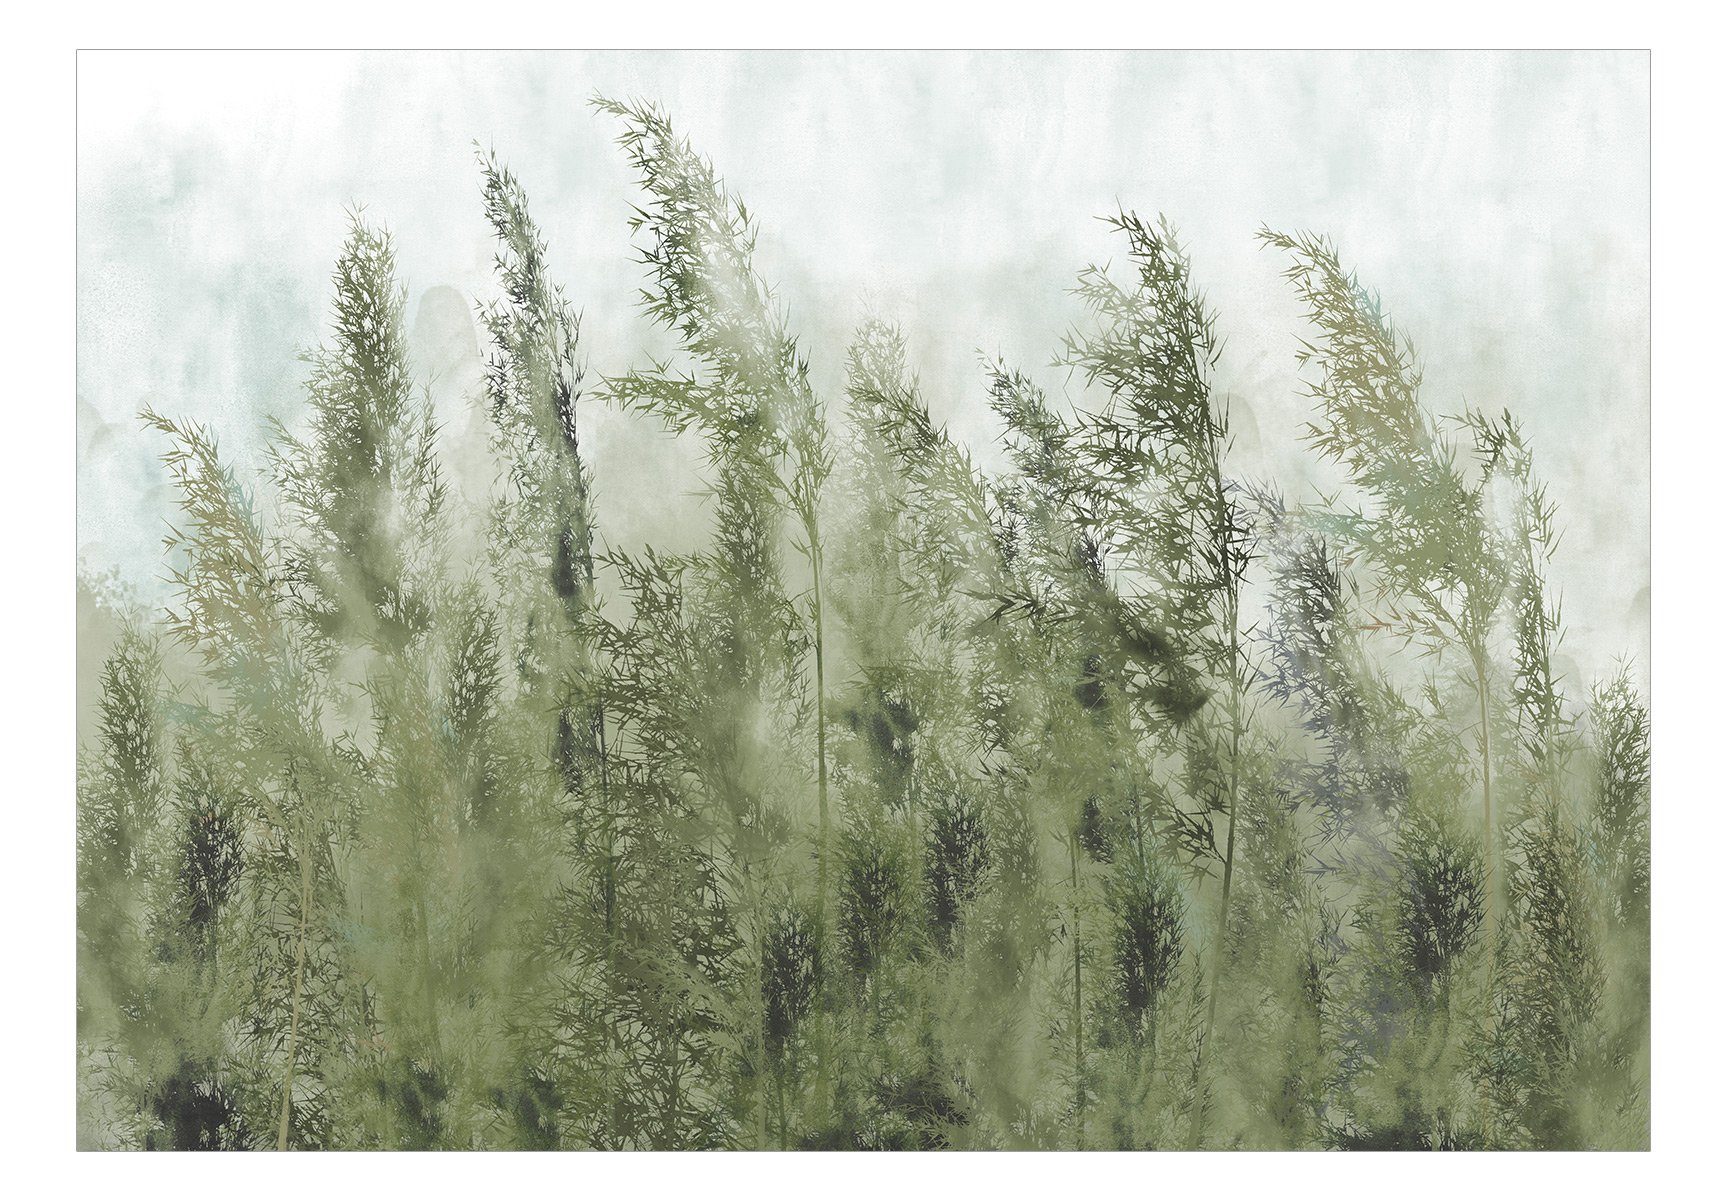 Tapete lichtbeständige matt, Design halb-matt, Grasses Vliestapete Green KUNSTLOFT - 0.98x0.7 Tall m,